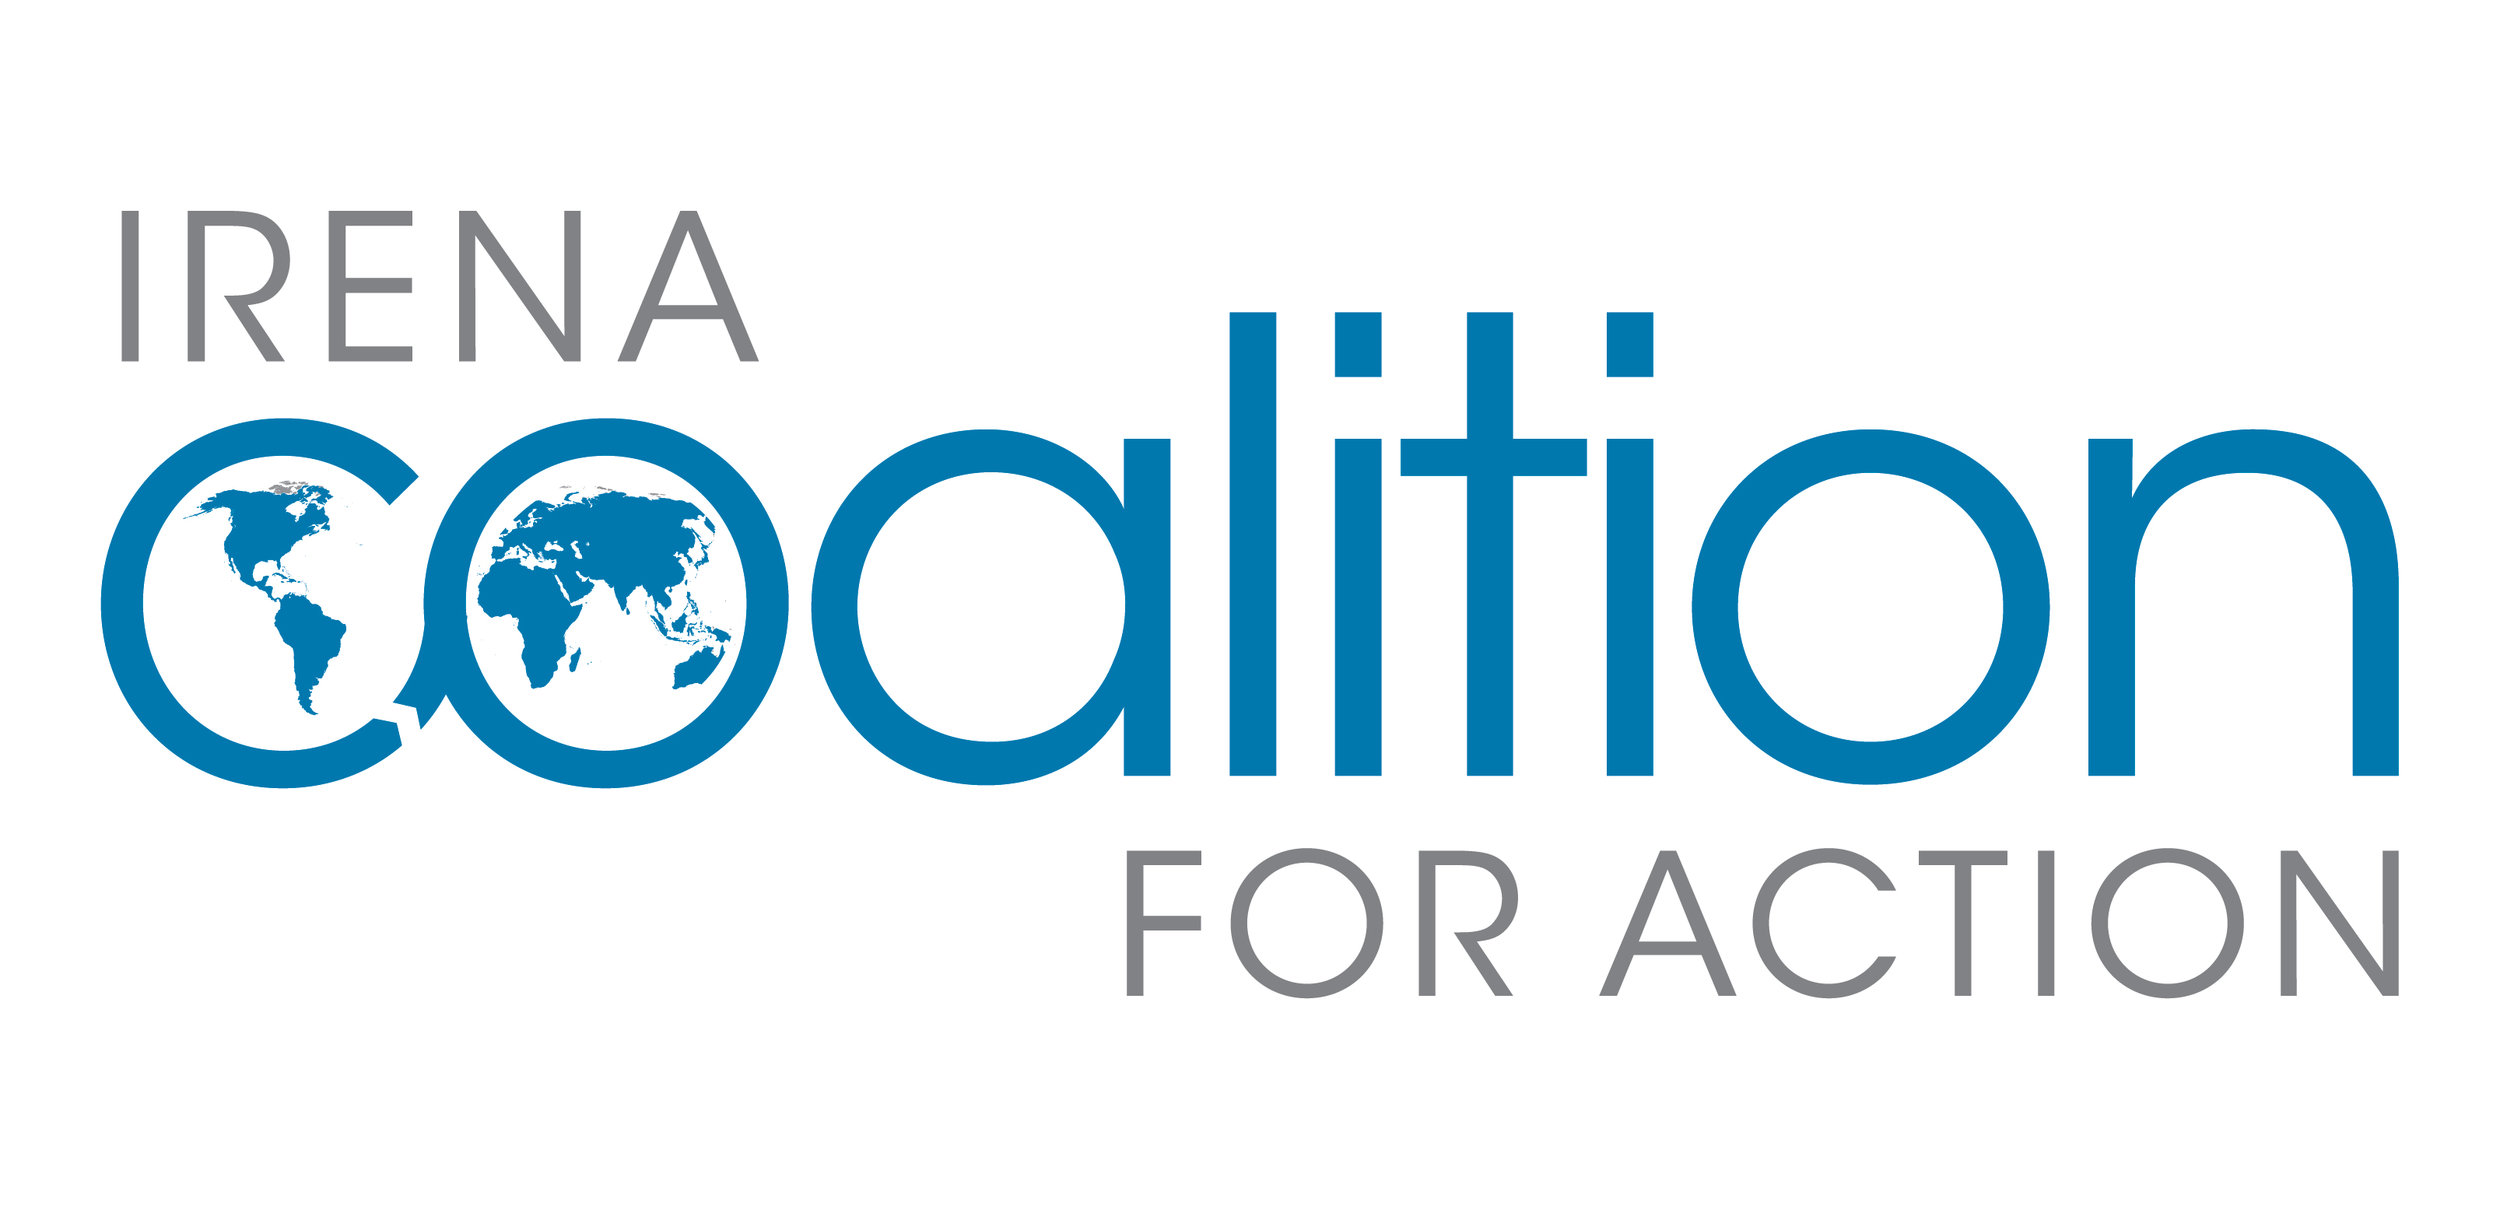 IRENA Coalition logo.jpg